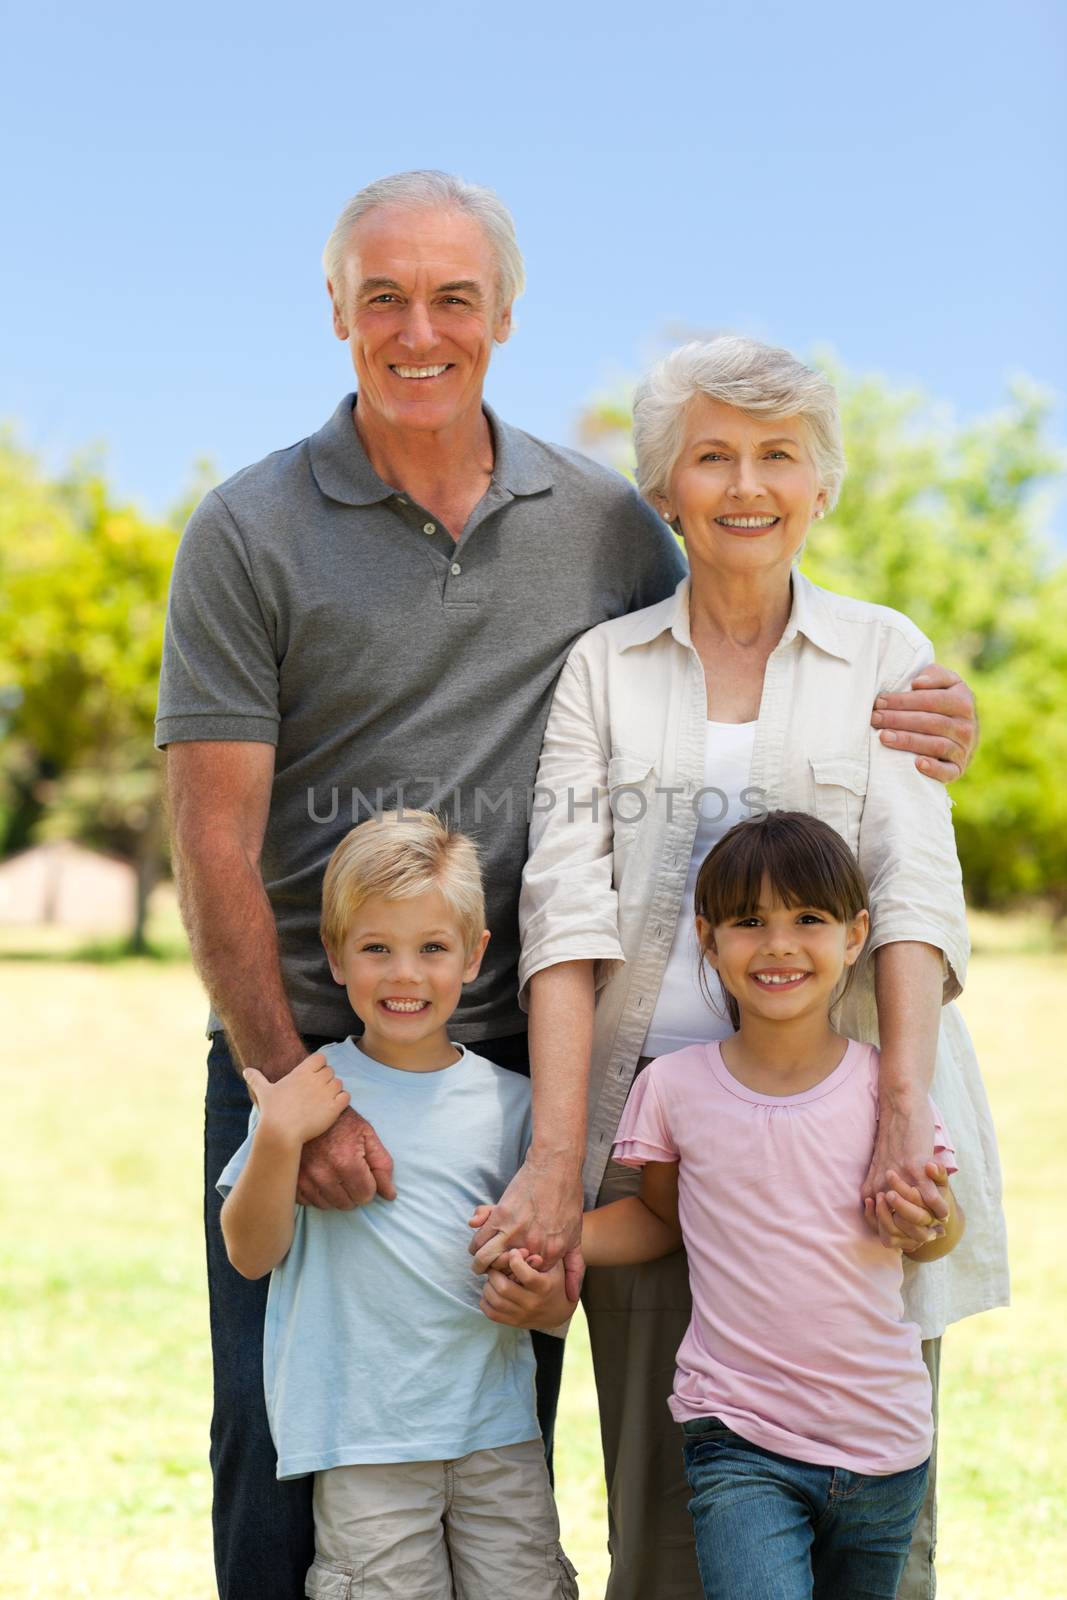 Grandparents with their grandchildren in the park by Wavebreakmedia